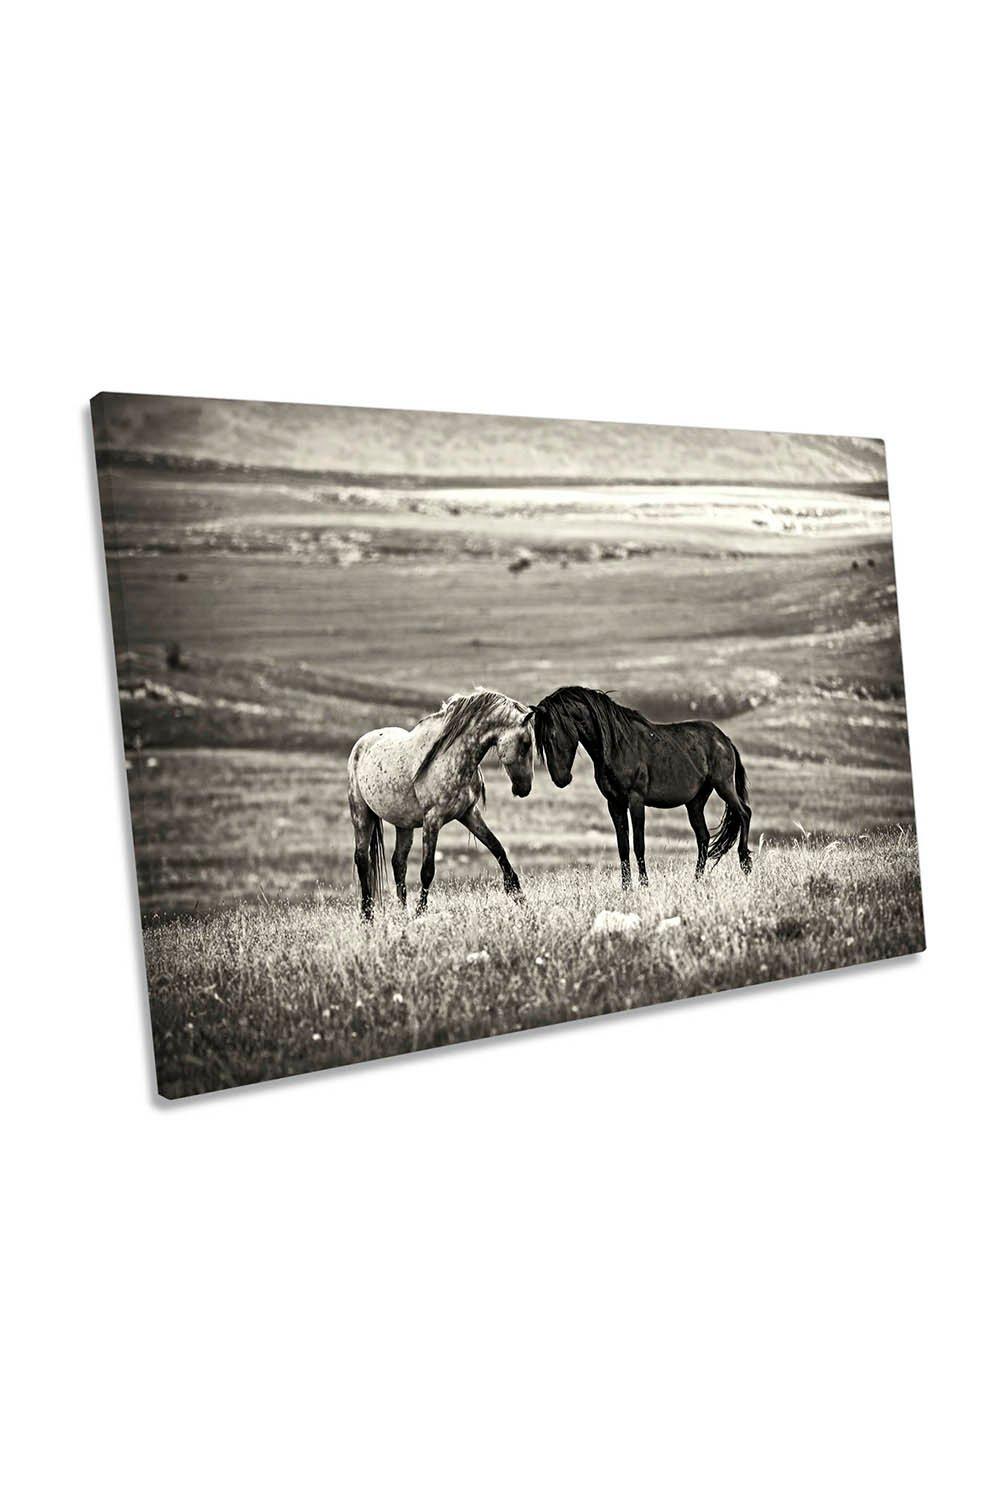 Close Encounter Horses Grey Canvas Wall Art Picture Print